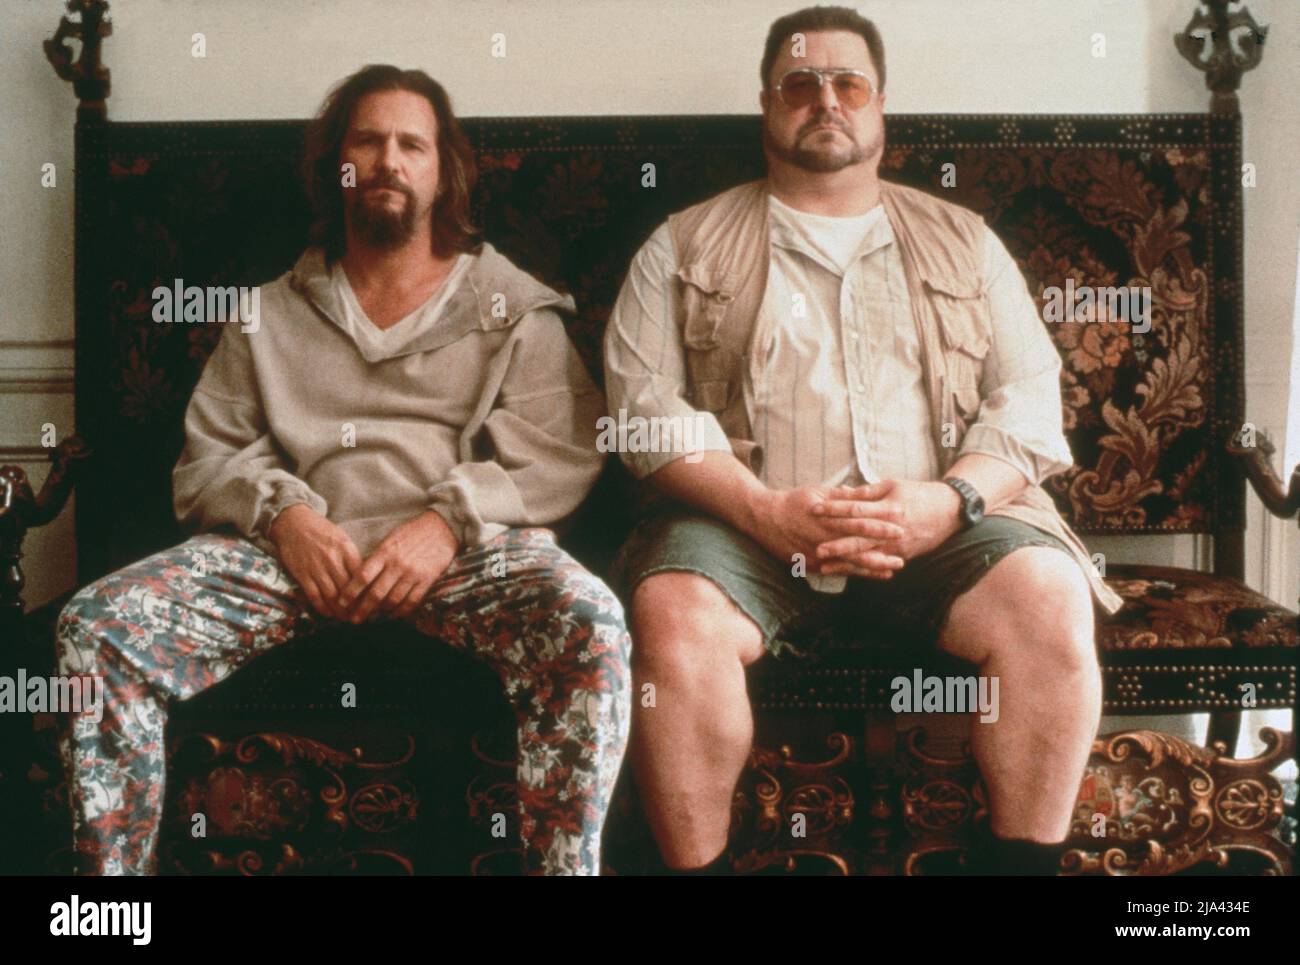 JEFF BRIDGES and JOHN GOODMAN in THE BIG LEBOWSKI (1998), directed by JOEL COEN. Credit: POLYGRAM/WORKING TITLE FILMS / Album Stock Photo